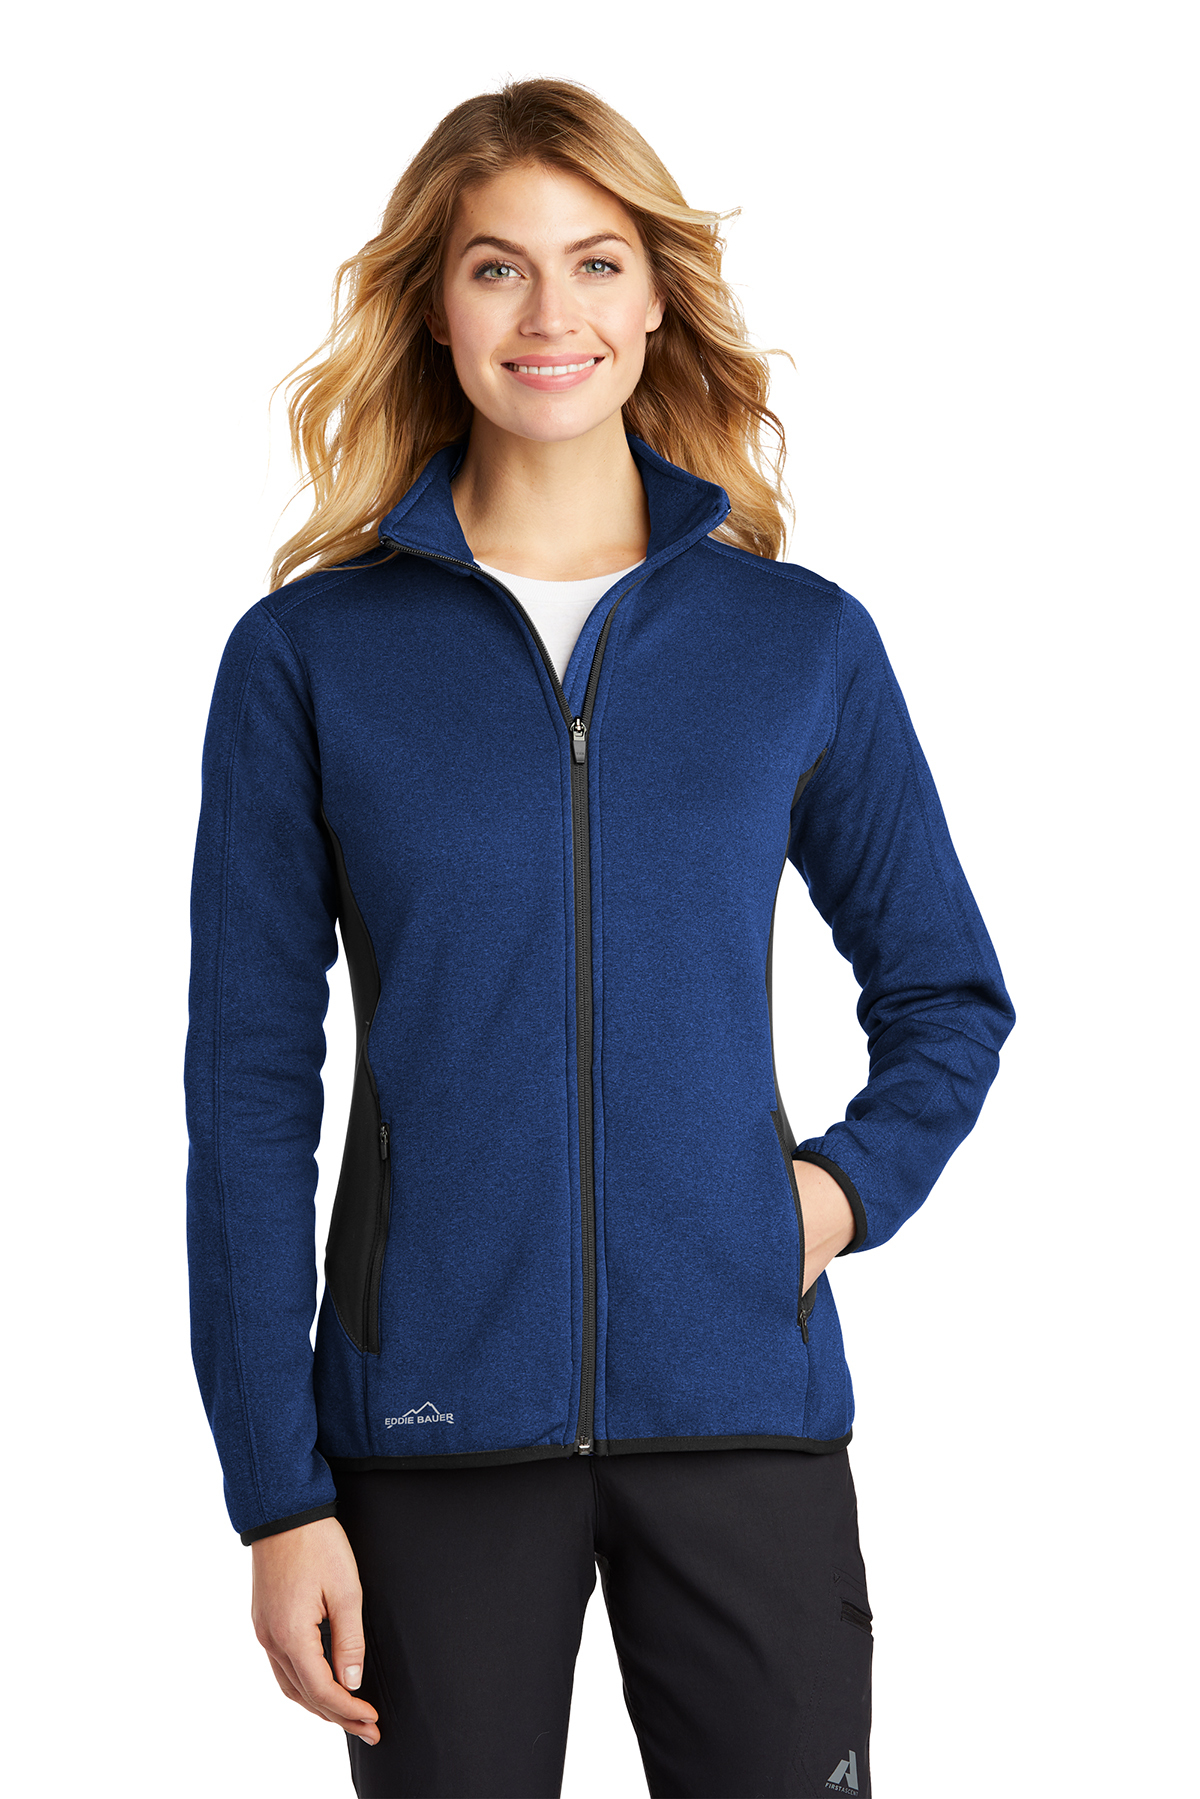 Eddie Bauer Ladies Full-Zip Heather Stretch Fleece Jacket | Product ...